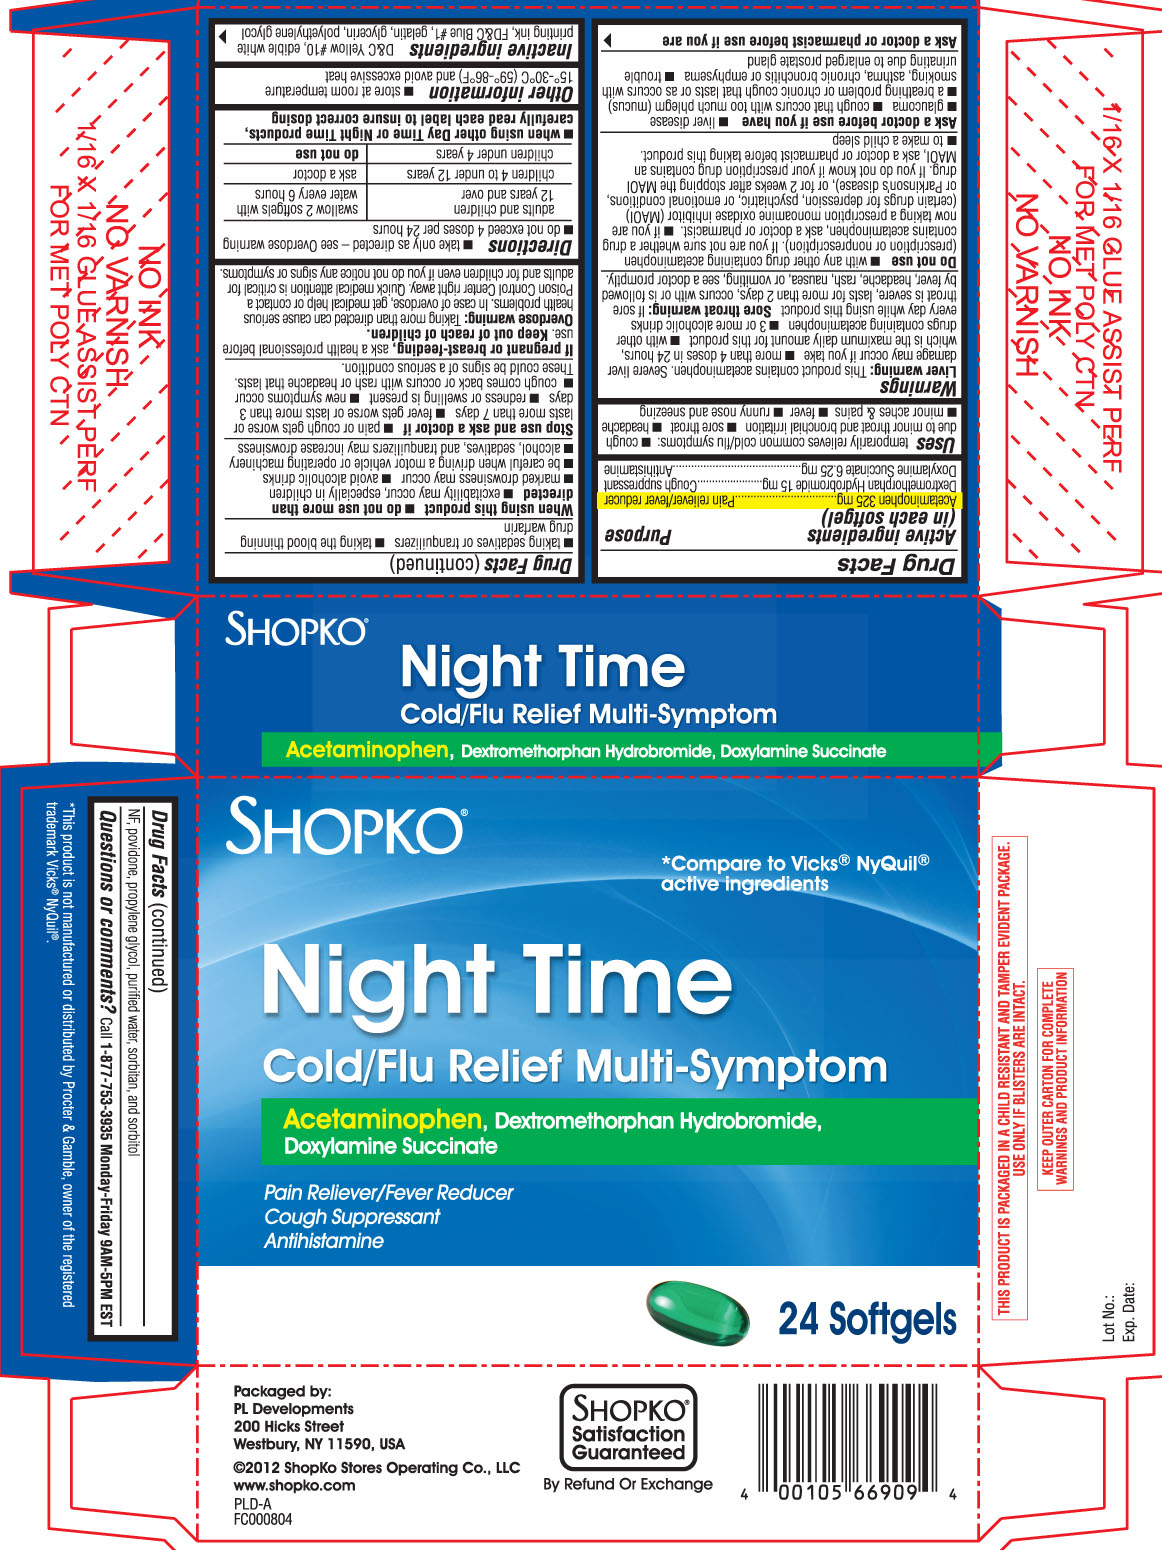 Night Time Cold/flu Relief Multi Symptom while Breastfeeding